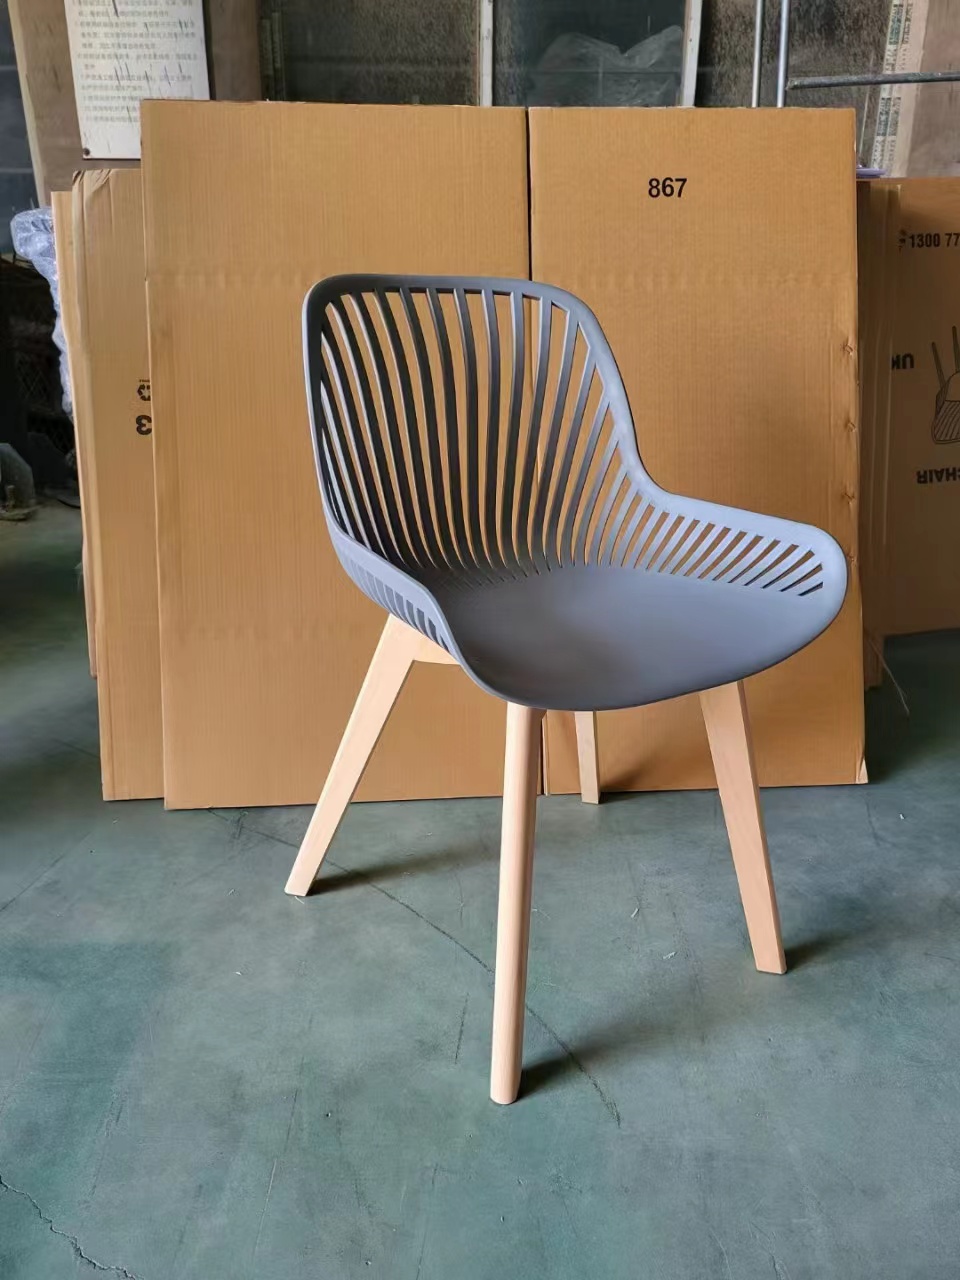 100% fresh PP chair 2022 new design